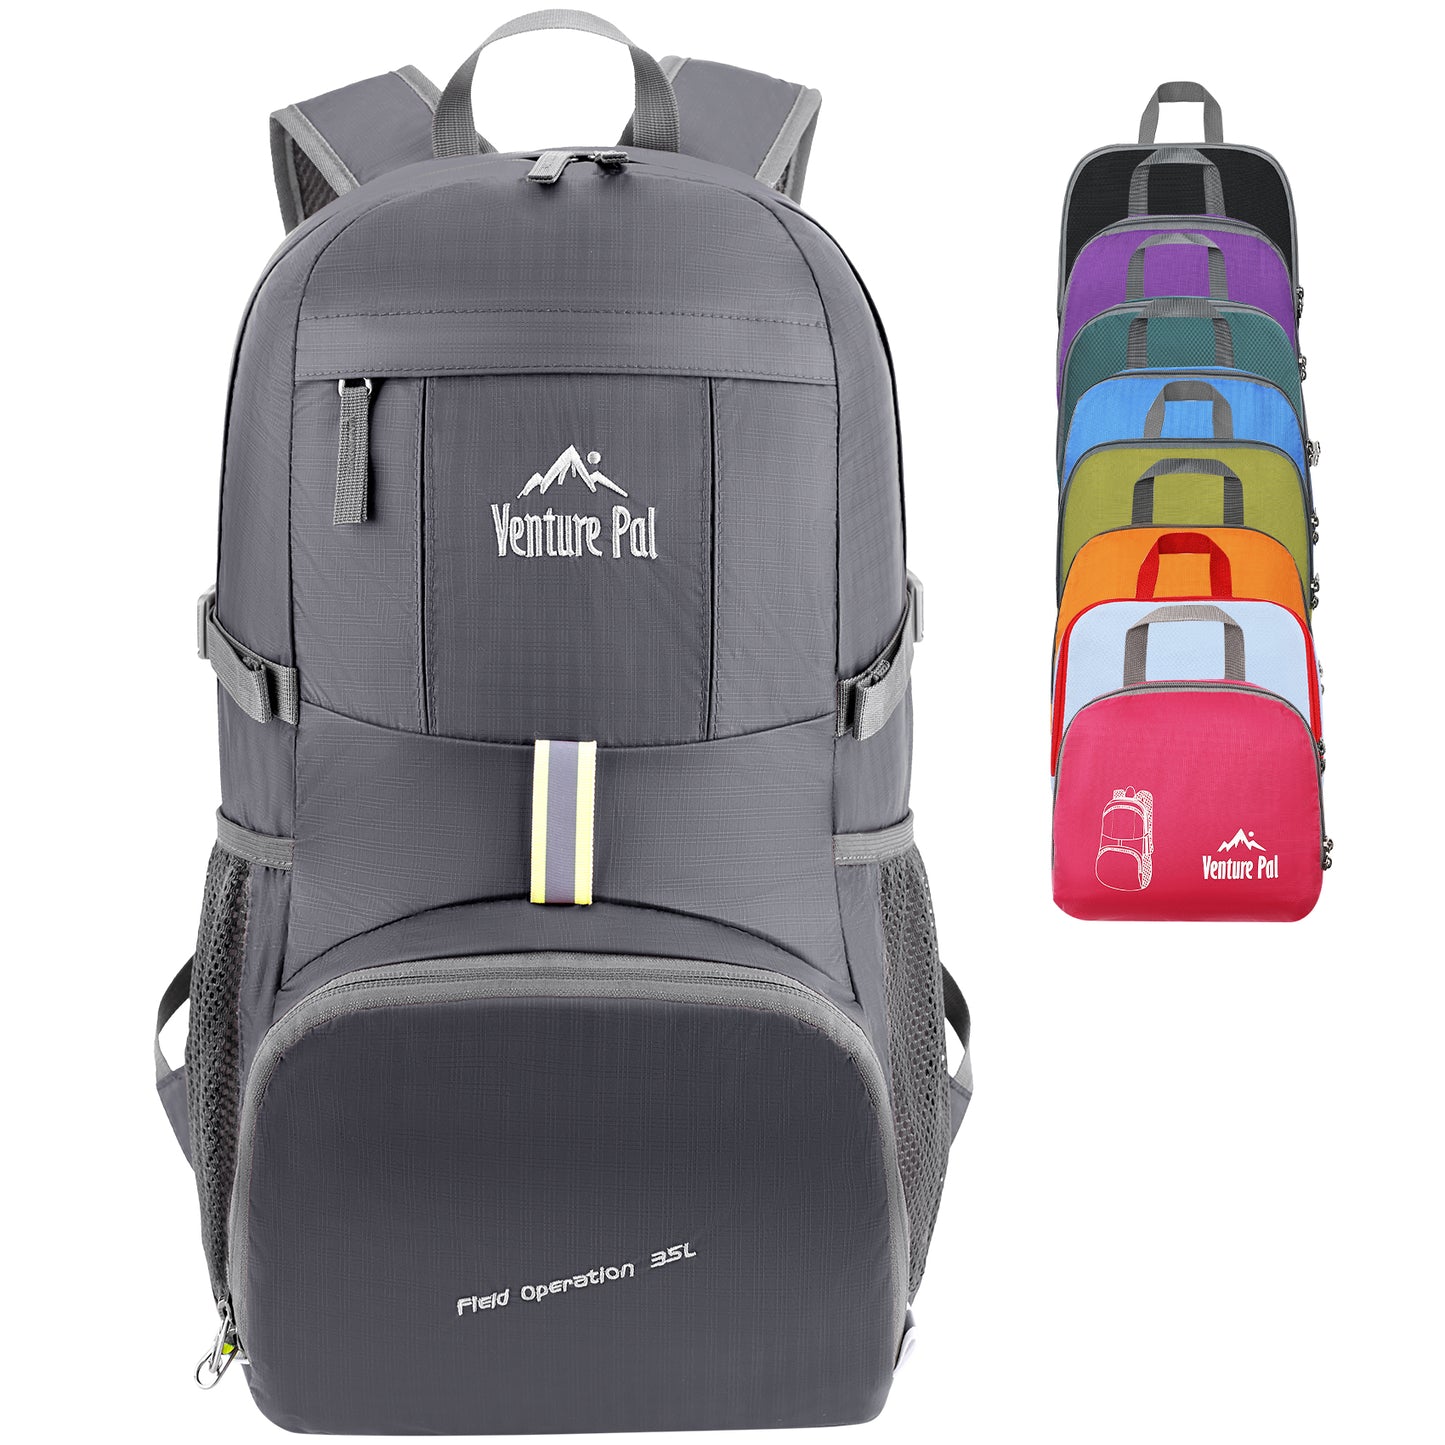 Venture Pal Gray 35L Double-Layer Bottom & Shoulder Straps Sports Backpack